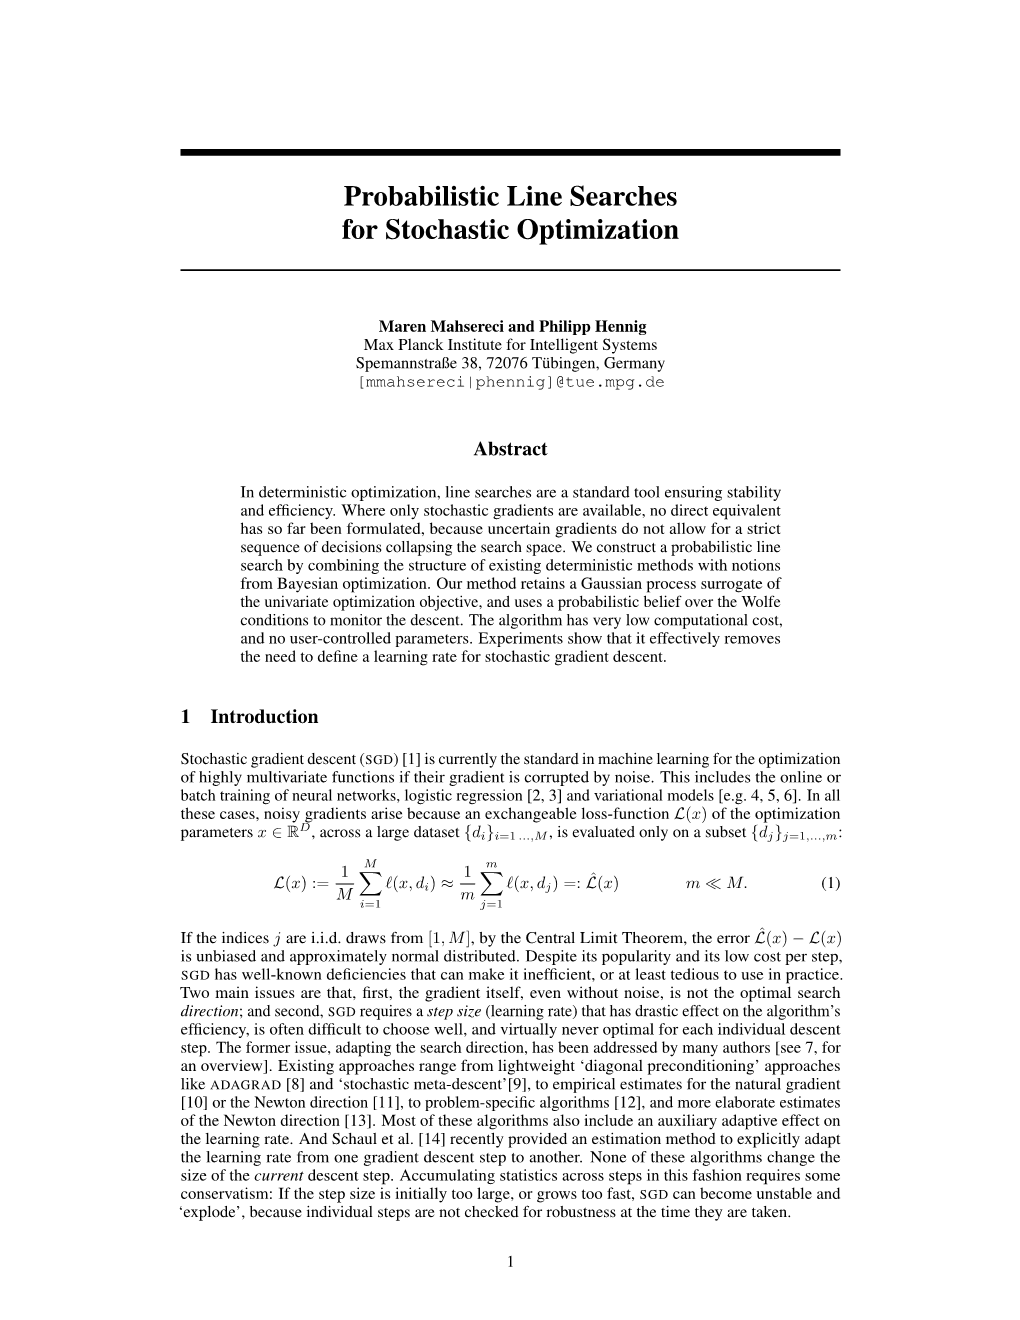 Probabilistic Line Searches for Stochastic Optimization